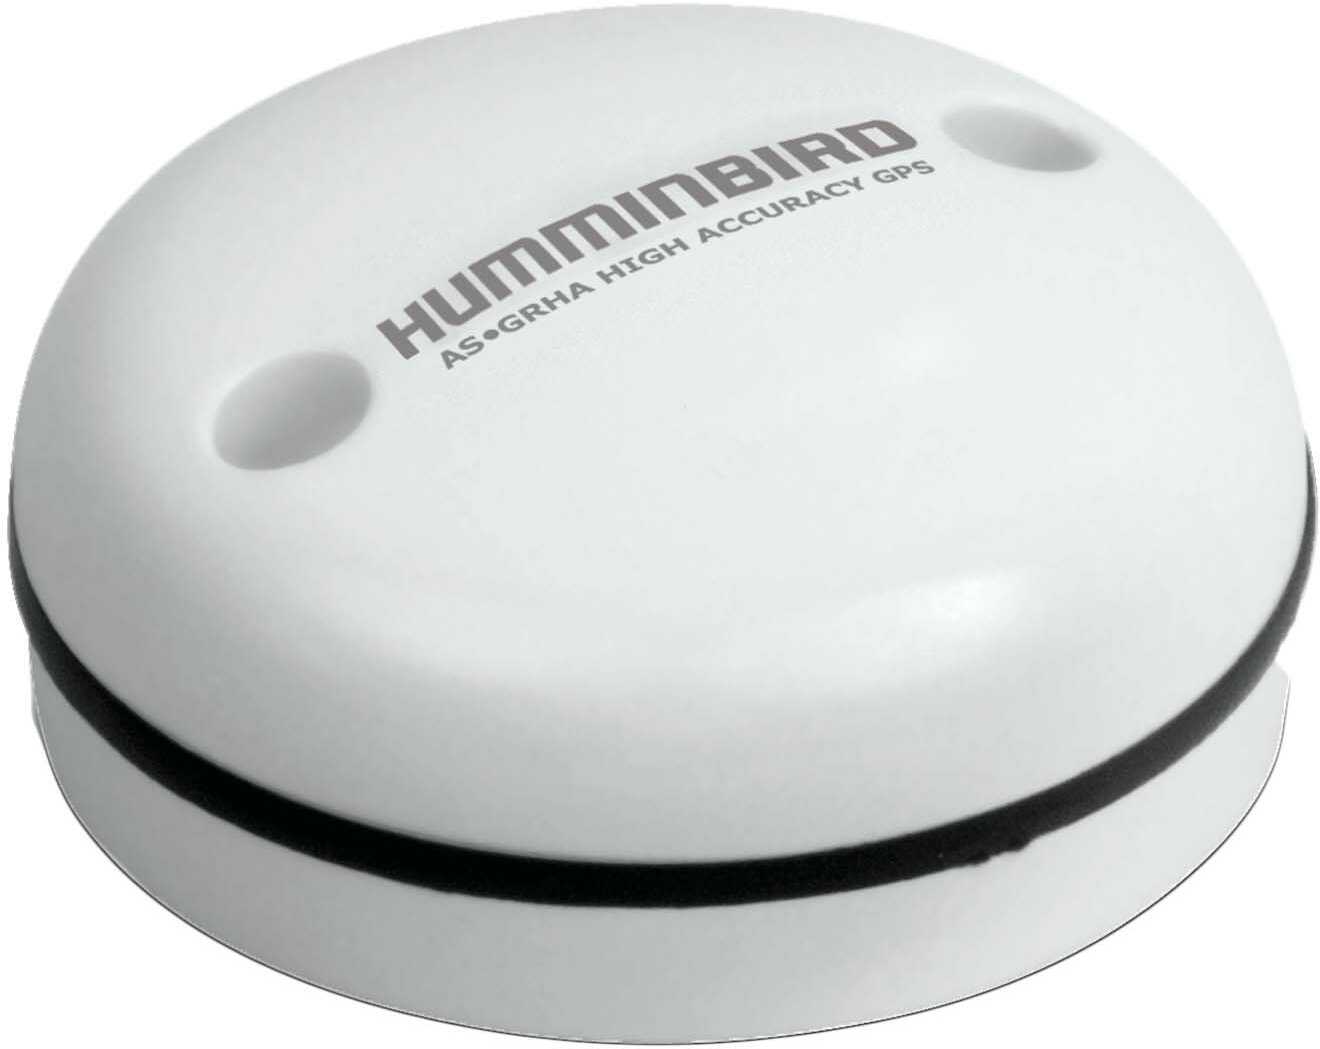 Humminbird AS GRP Precision GPS Receiver Model: 408920-1